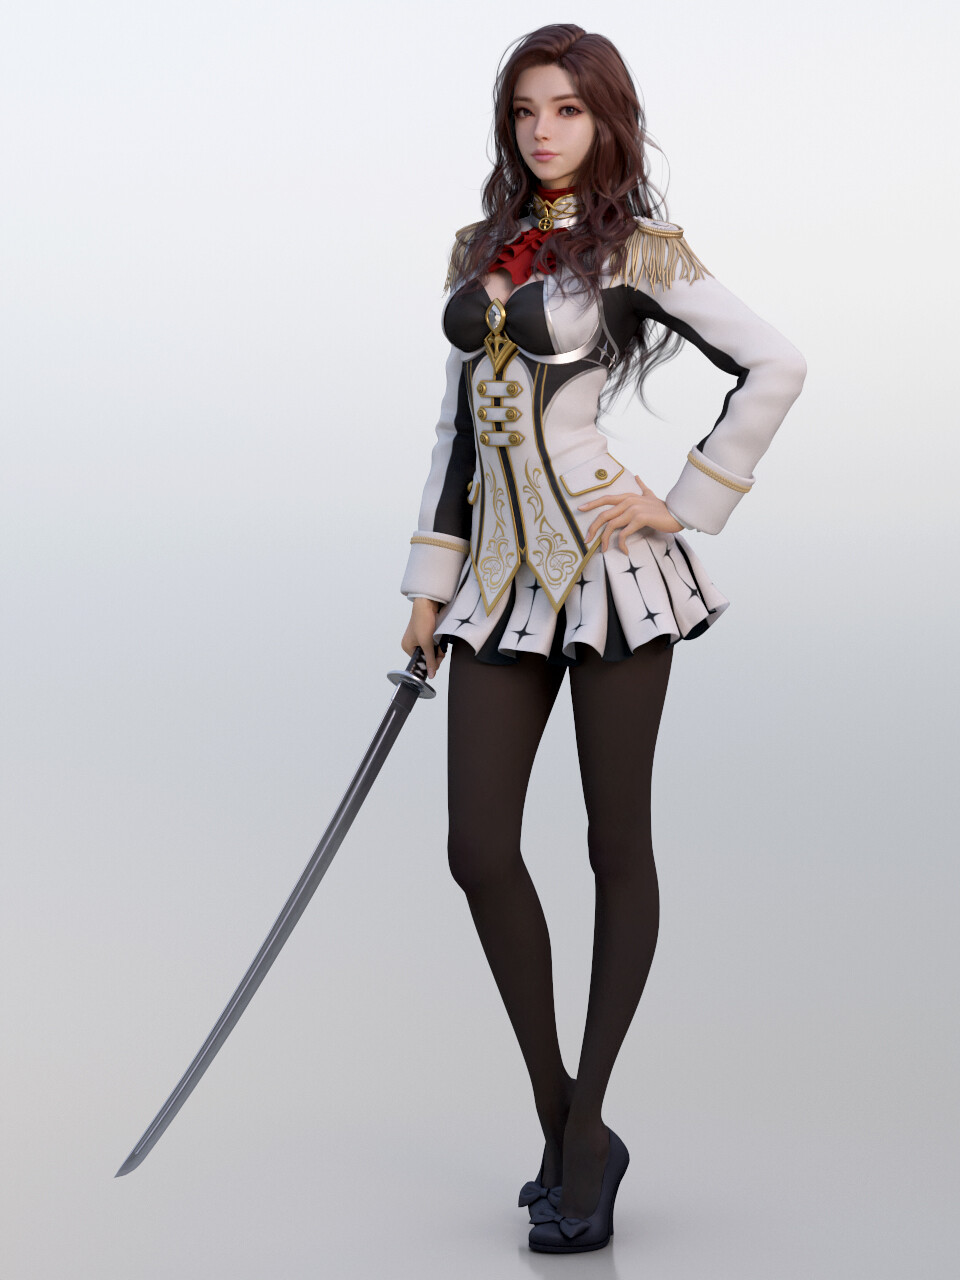 General 960x1280 Shin JeongHo CGI women brunette long hair wavy hair hands on hips weapon sword simple background